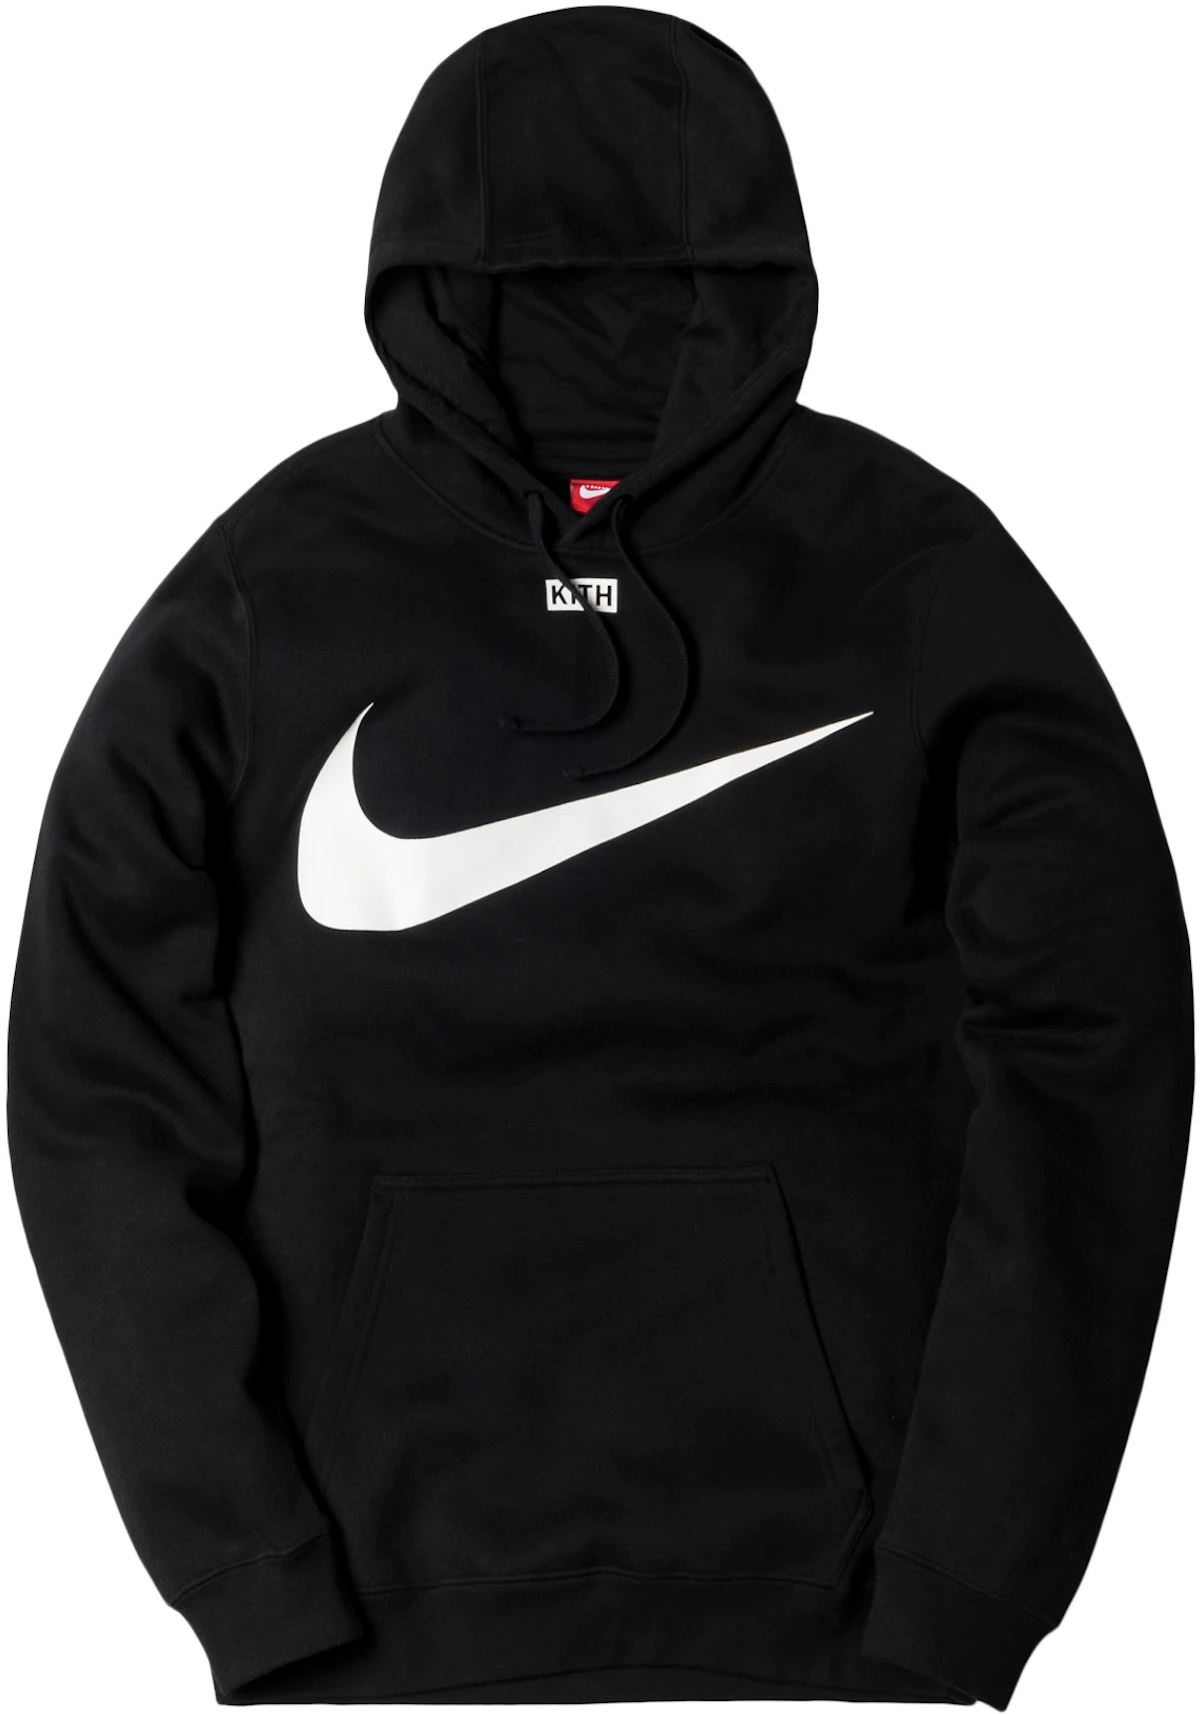 Kith Nike Swoosh Hoodie Black - FW17 - GB